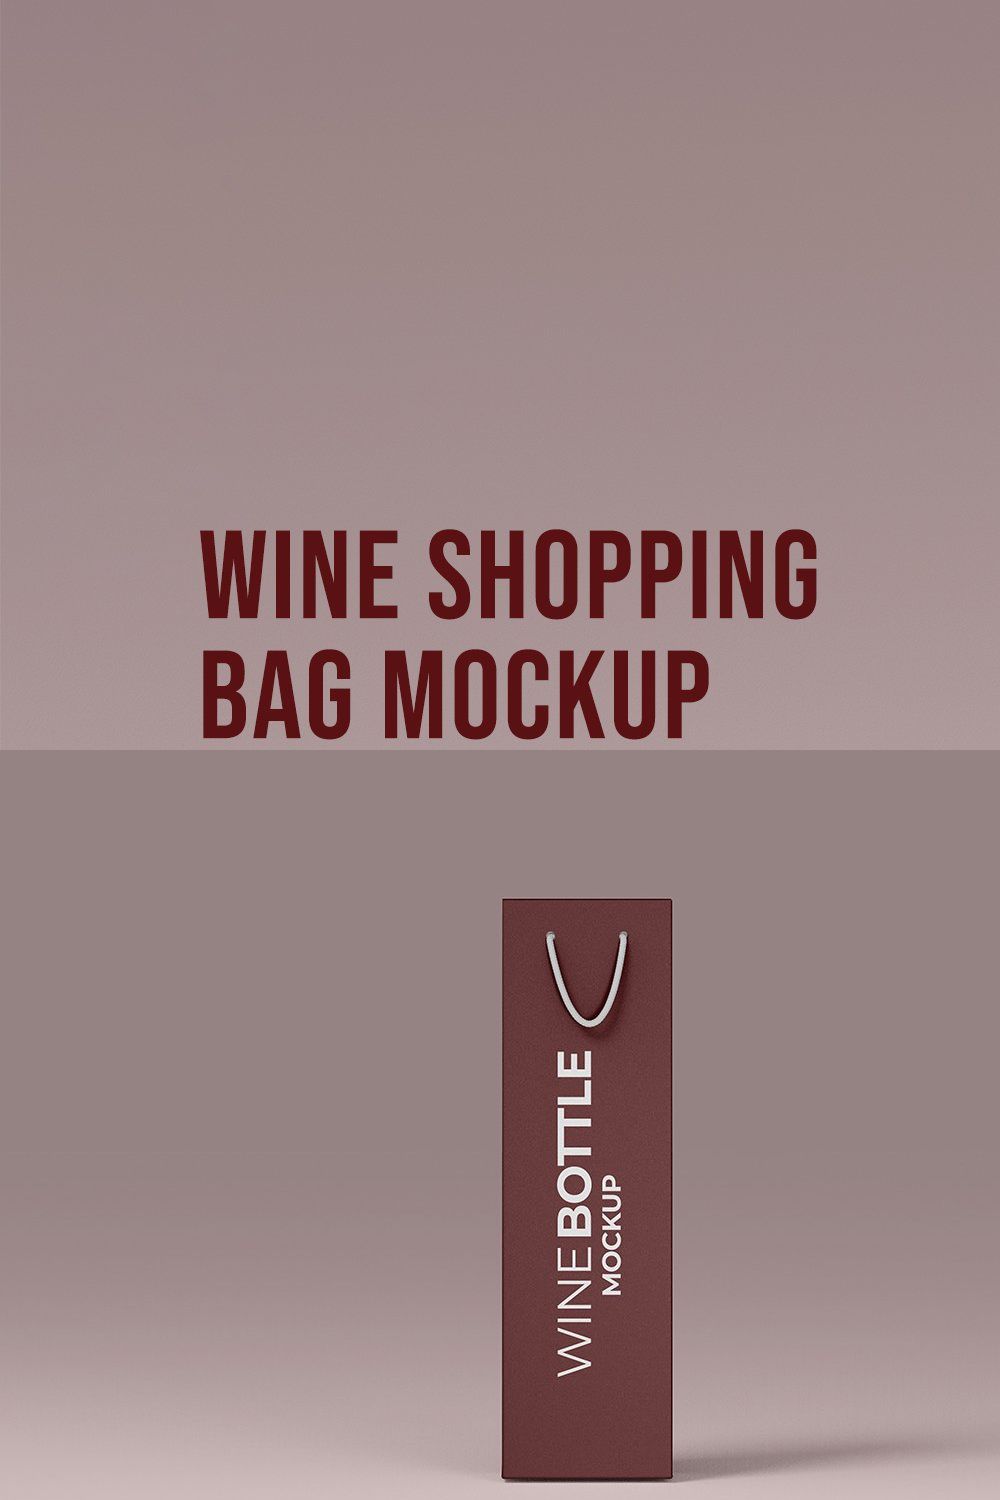 Wine Shopping Bag Mockup pinterest preview image.